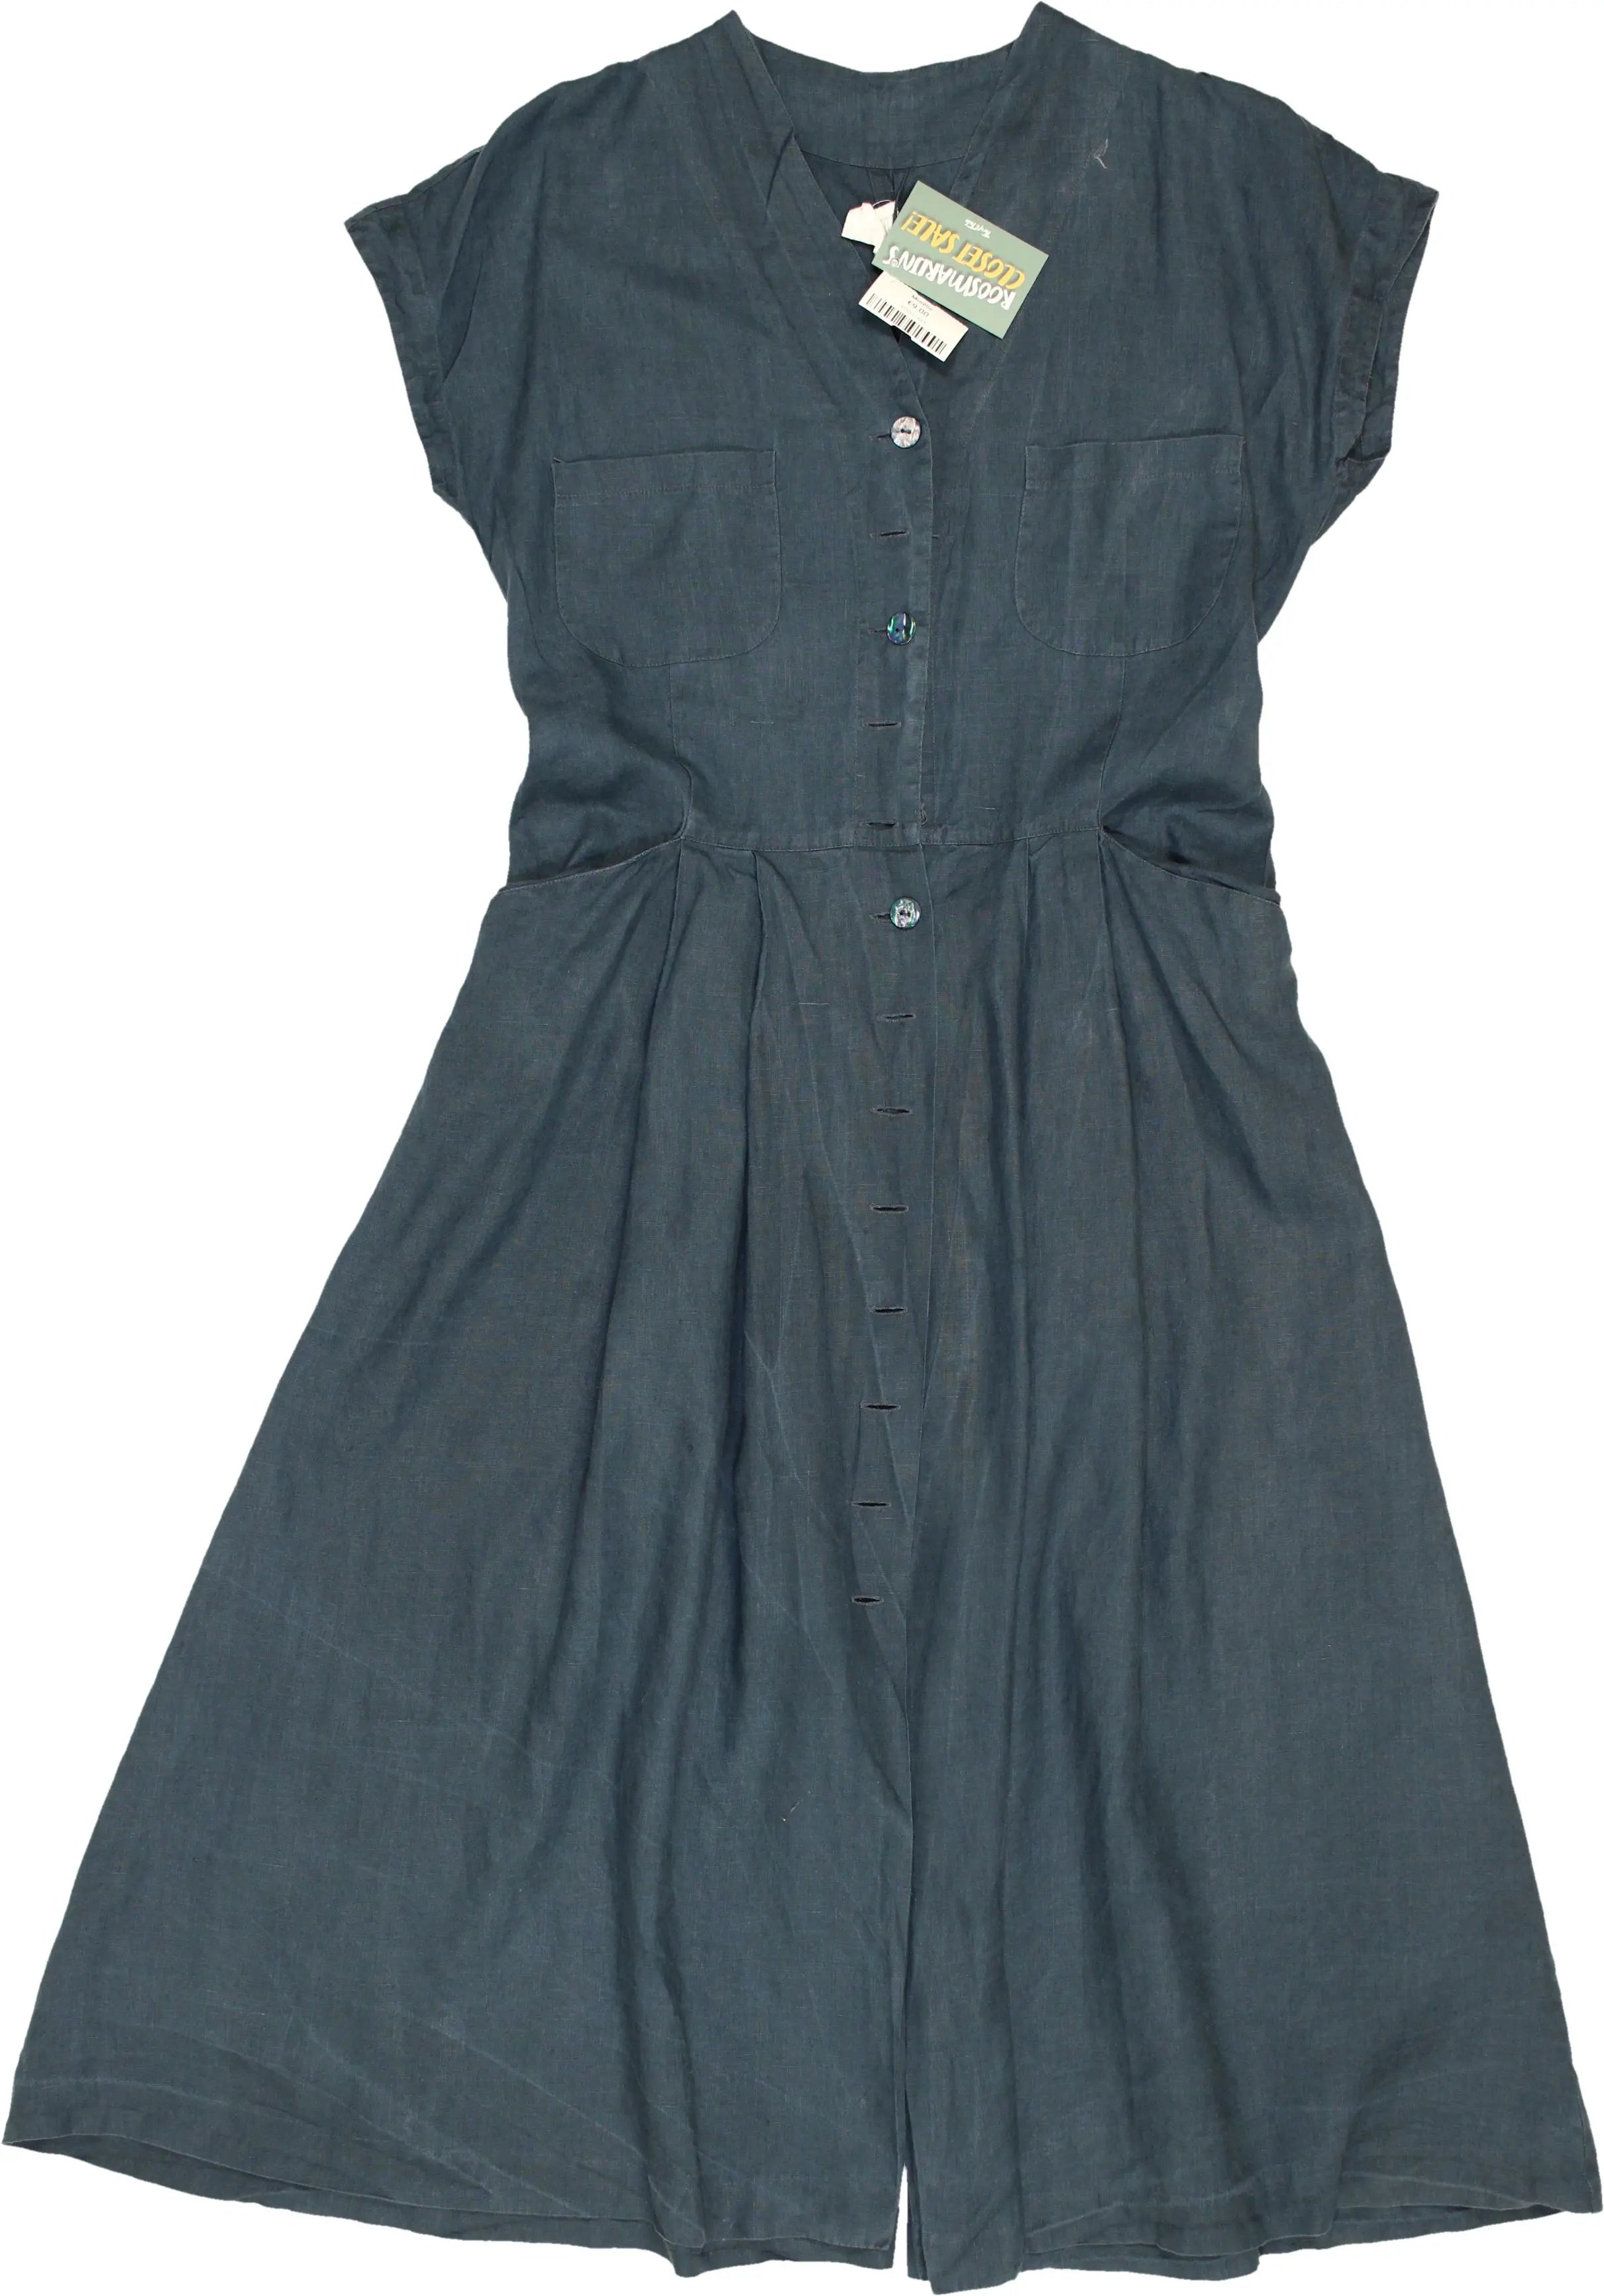 Morélle - Linen Dress- ThriftTale.com - Vintage and second handclothing